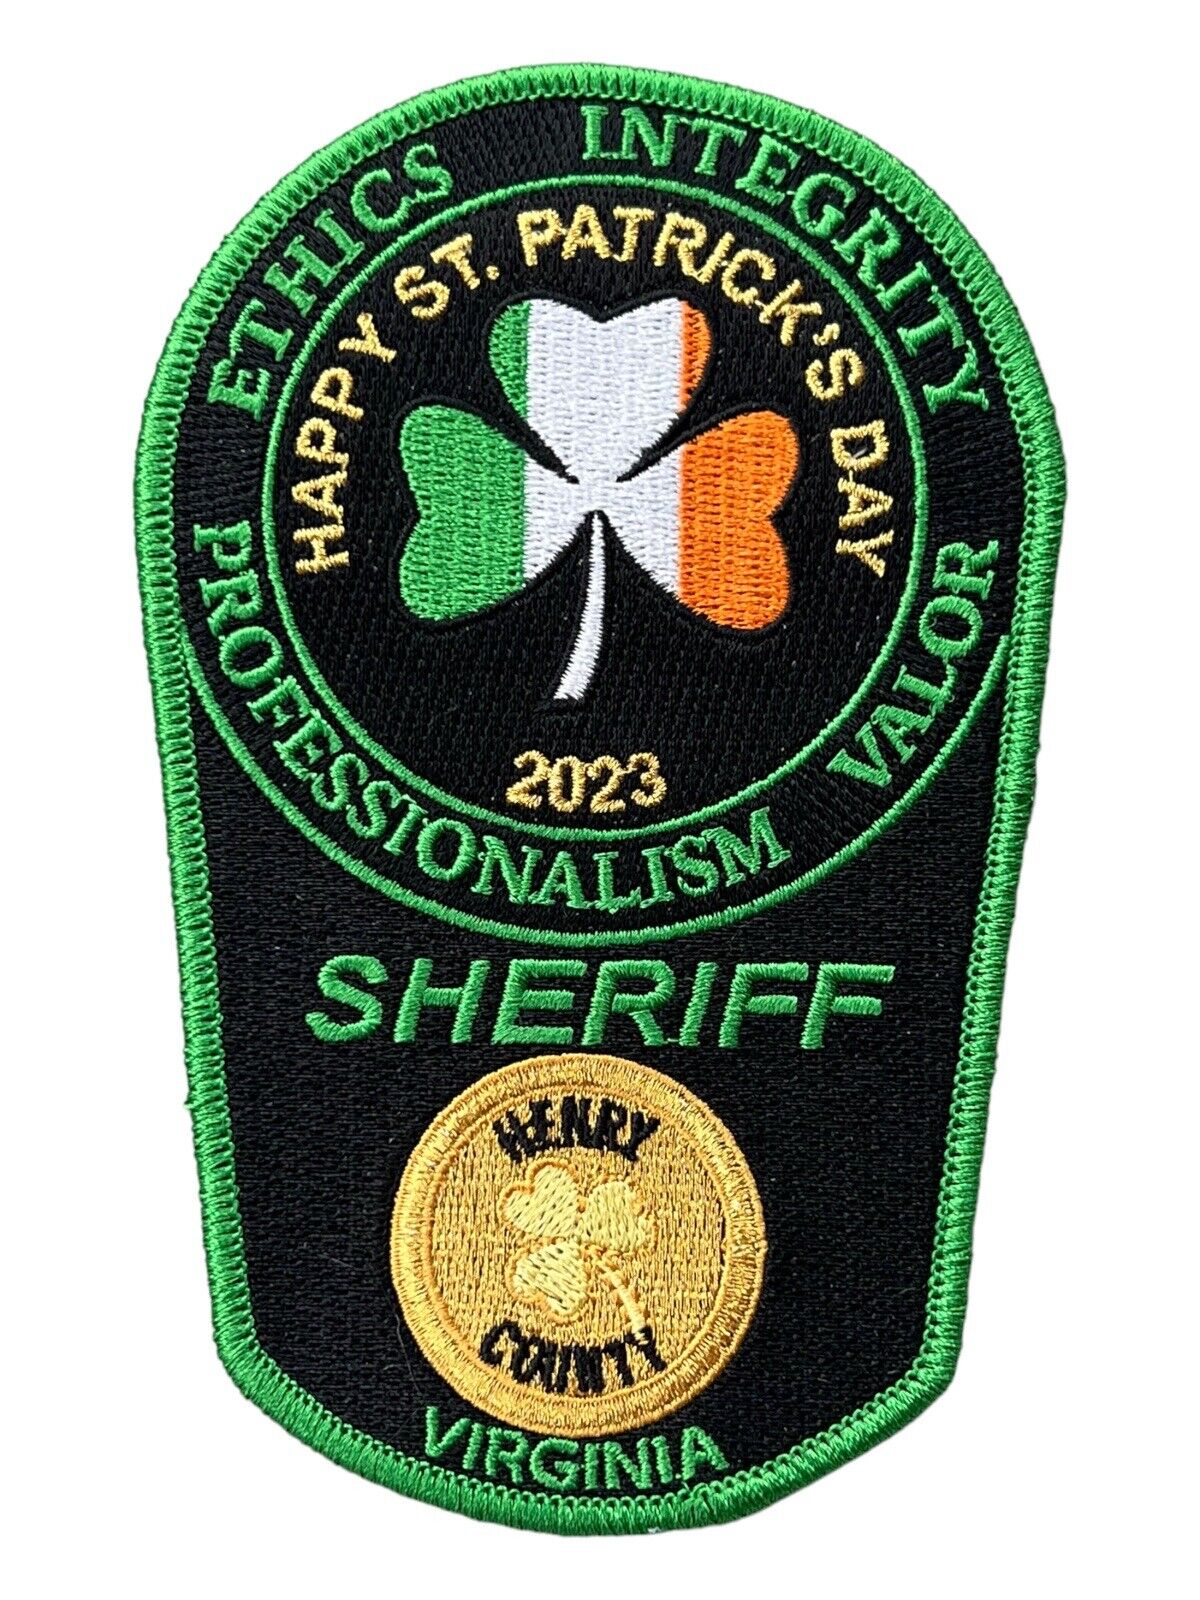 Henry County Virginia Sheriff's Office 2023 St. Patrick's Day Police Patch